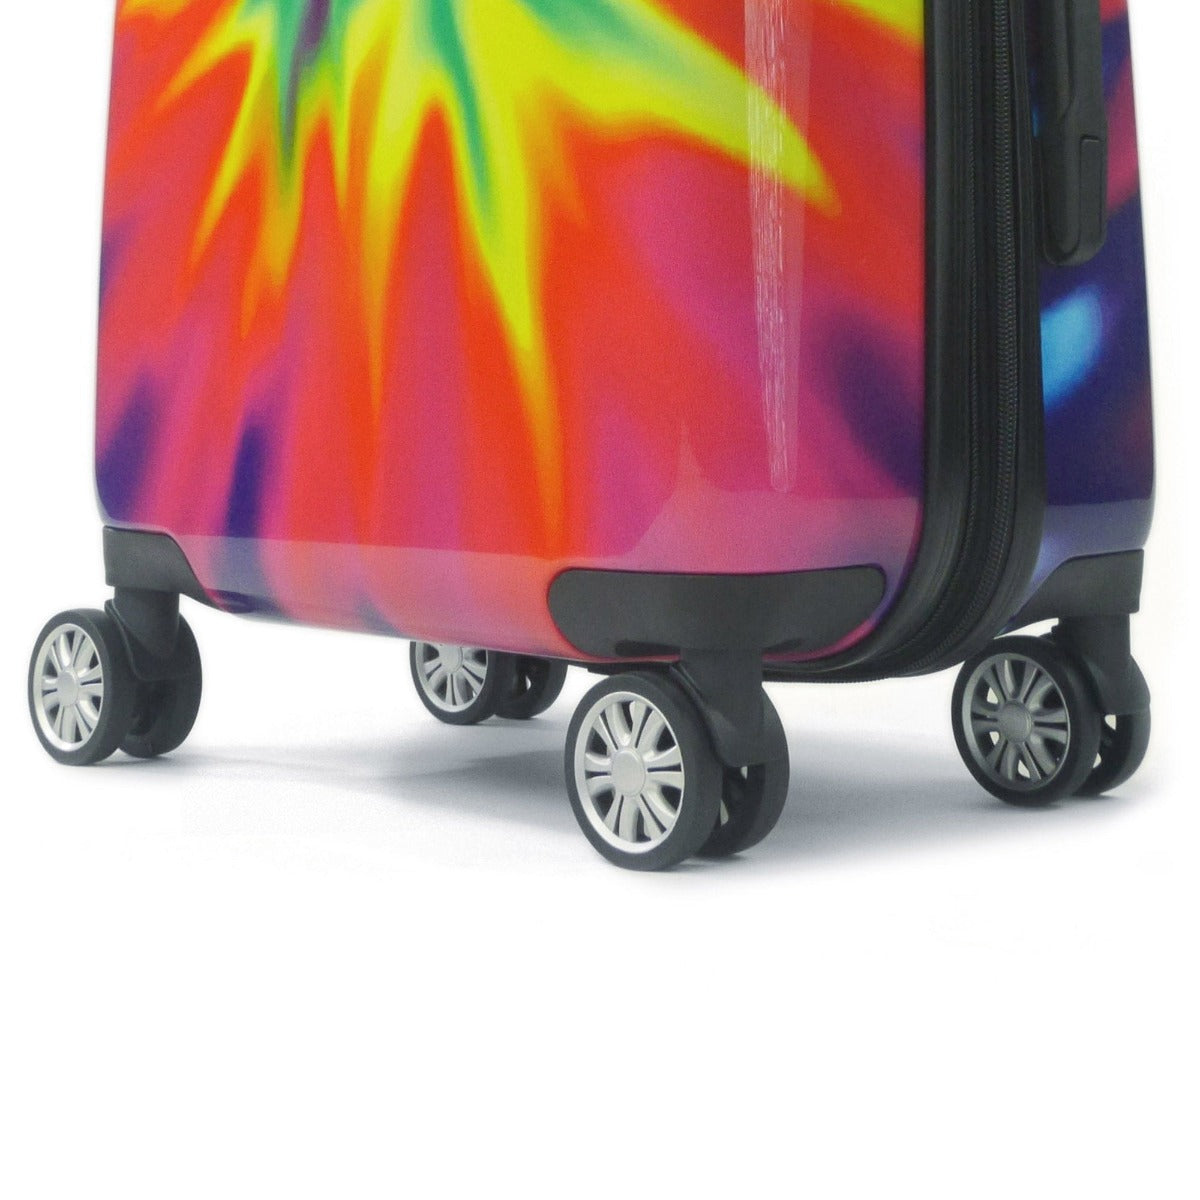 Tie dye Rainbow Swirl Suitcase Ful Hard sided 3 Pc Rolling Luggage Set 22 inch 24 inch 28 inch On Sale $50 off 360 Spinner Wheels